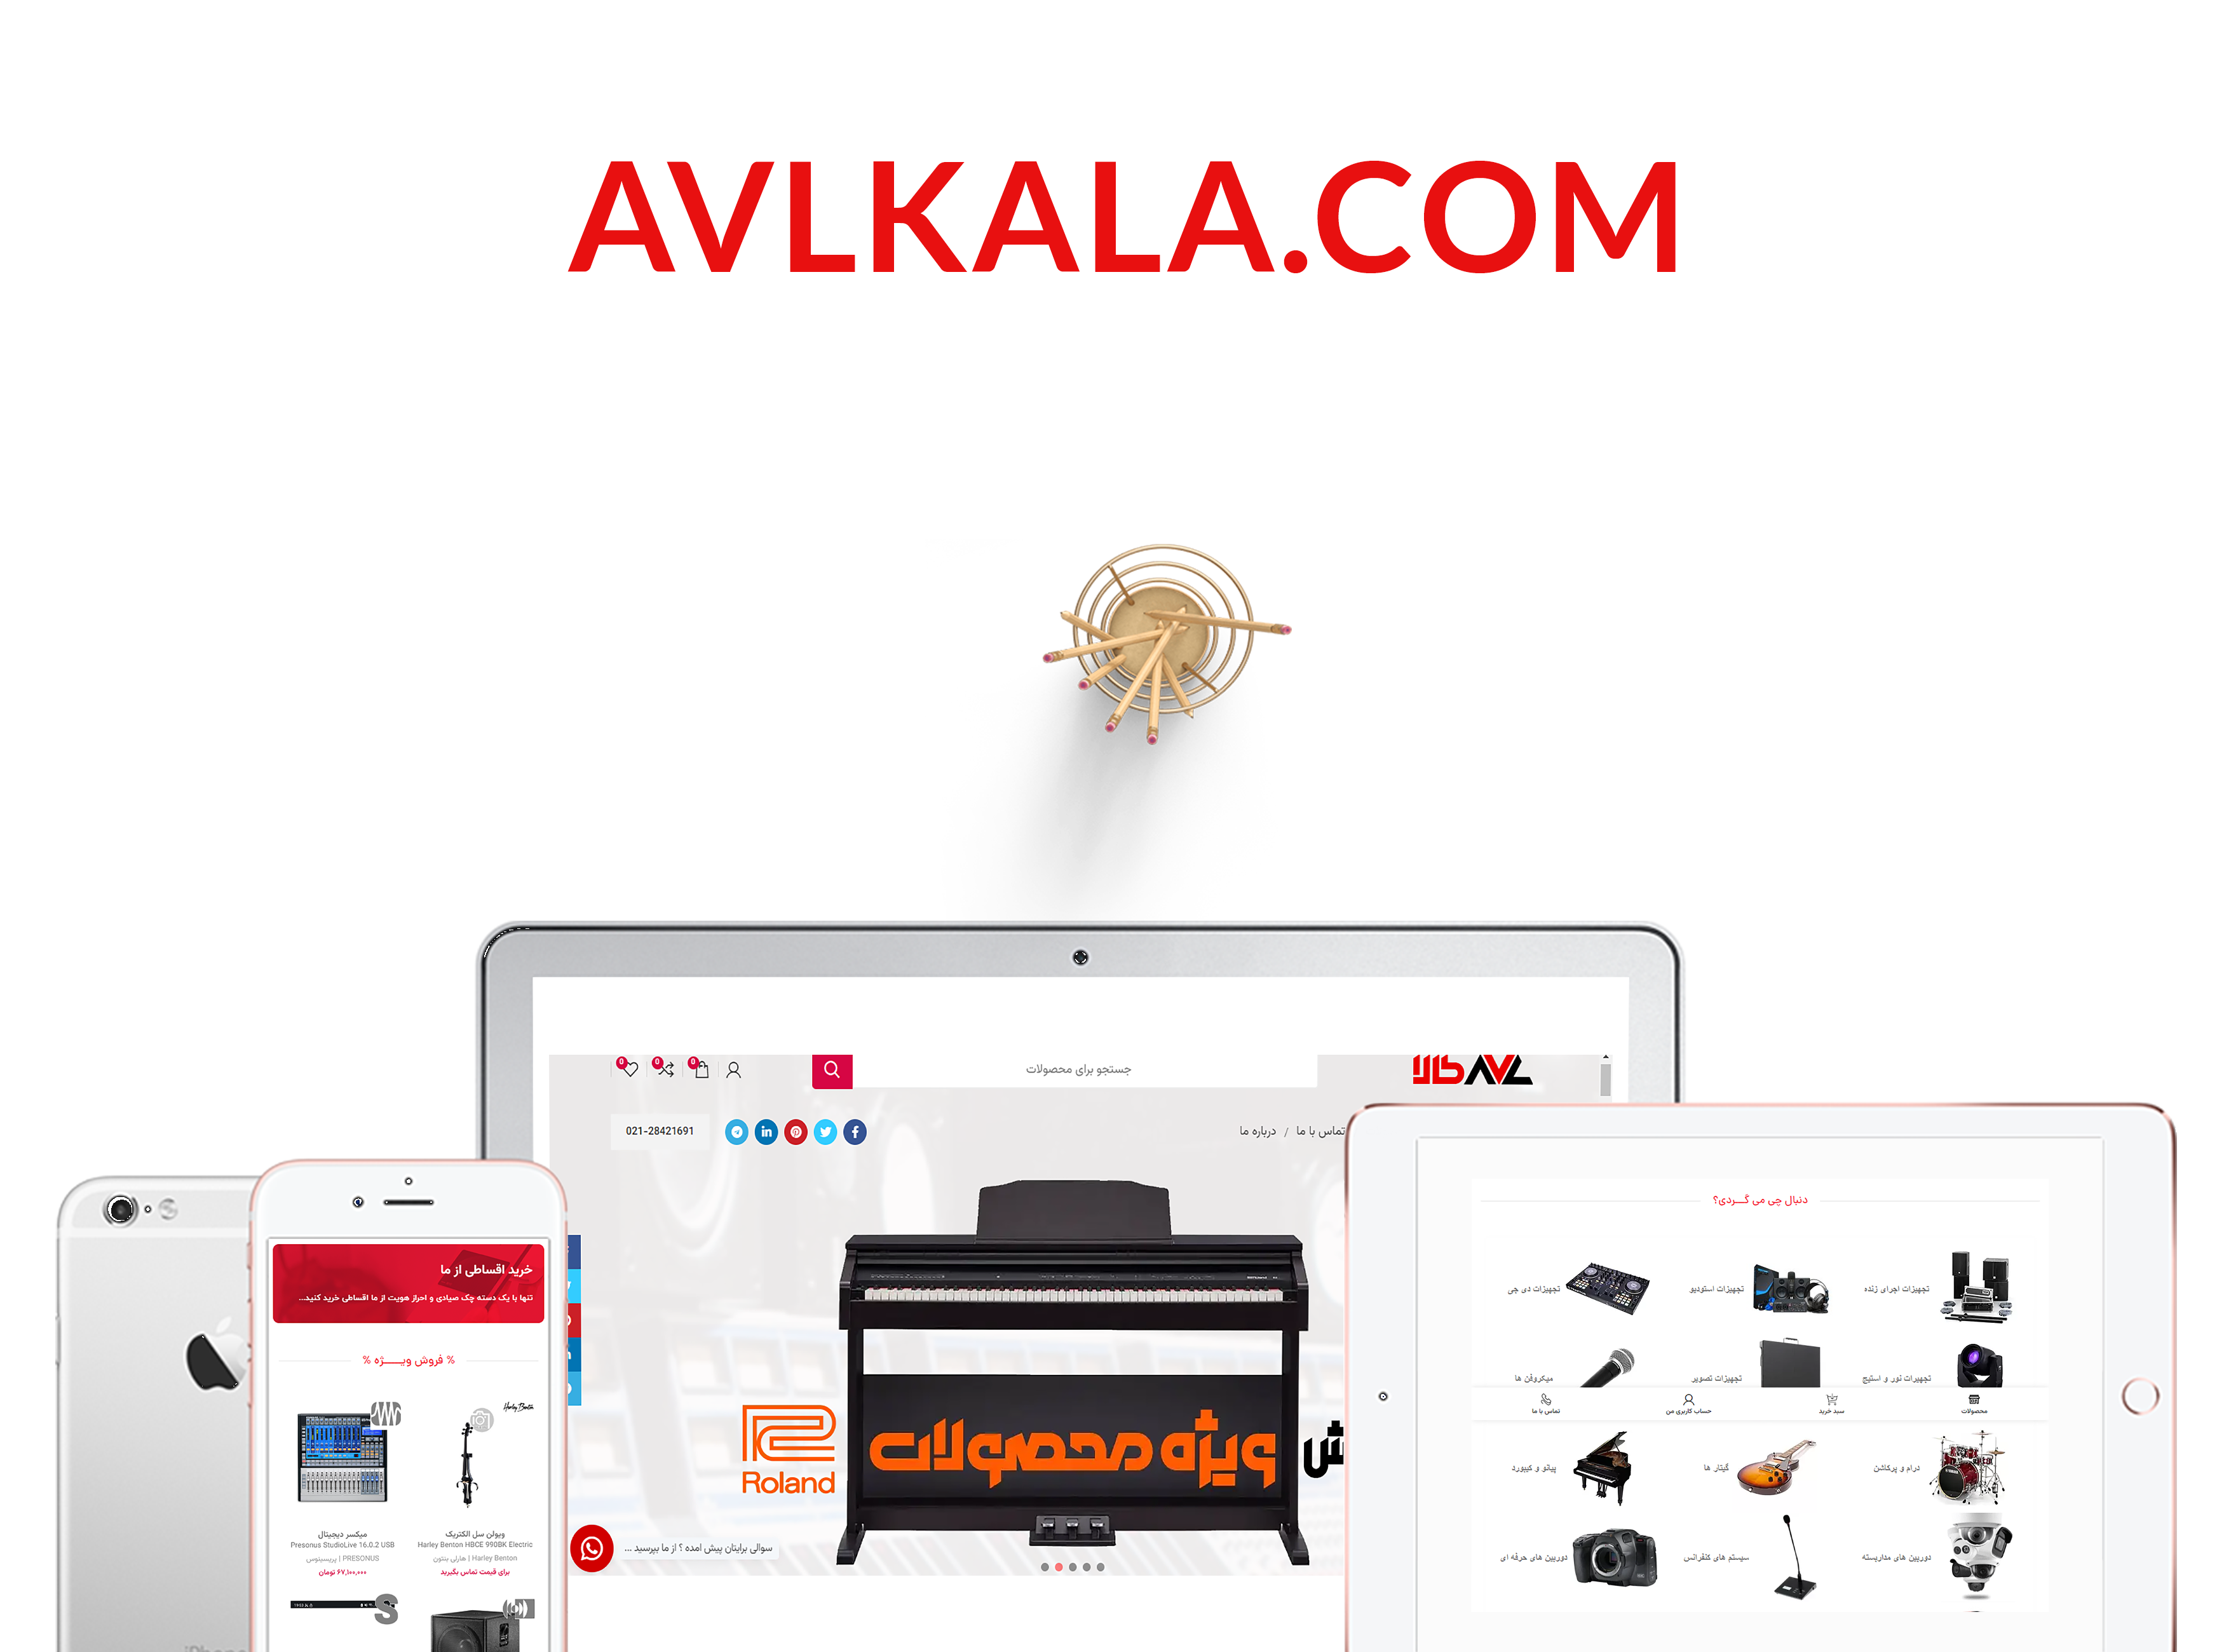 AVLKALA.COM